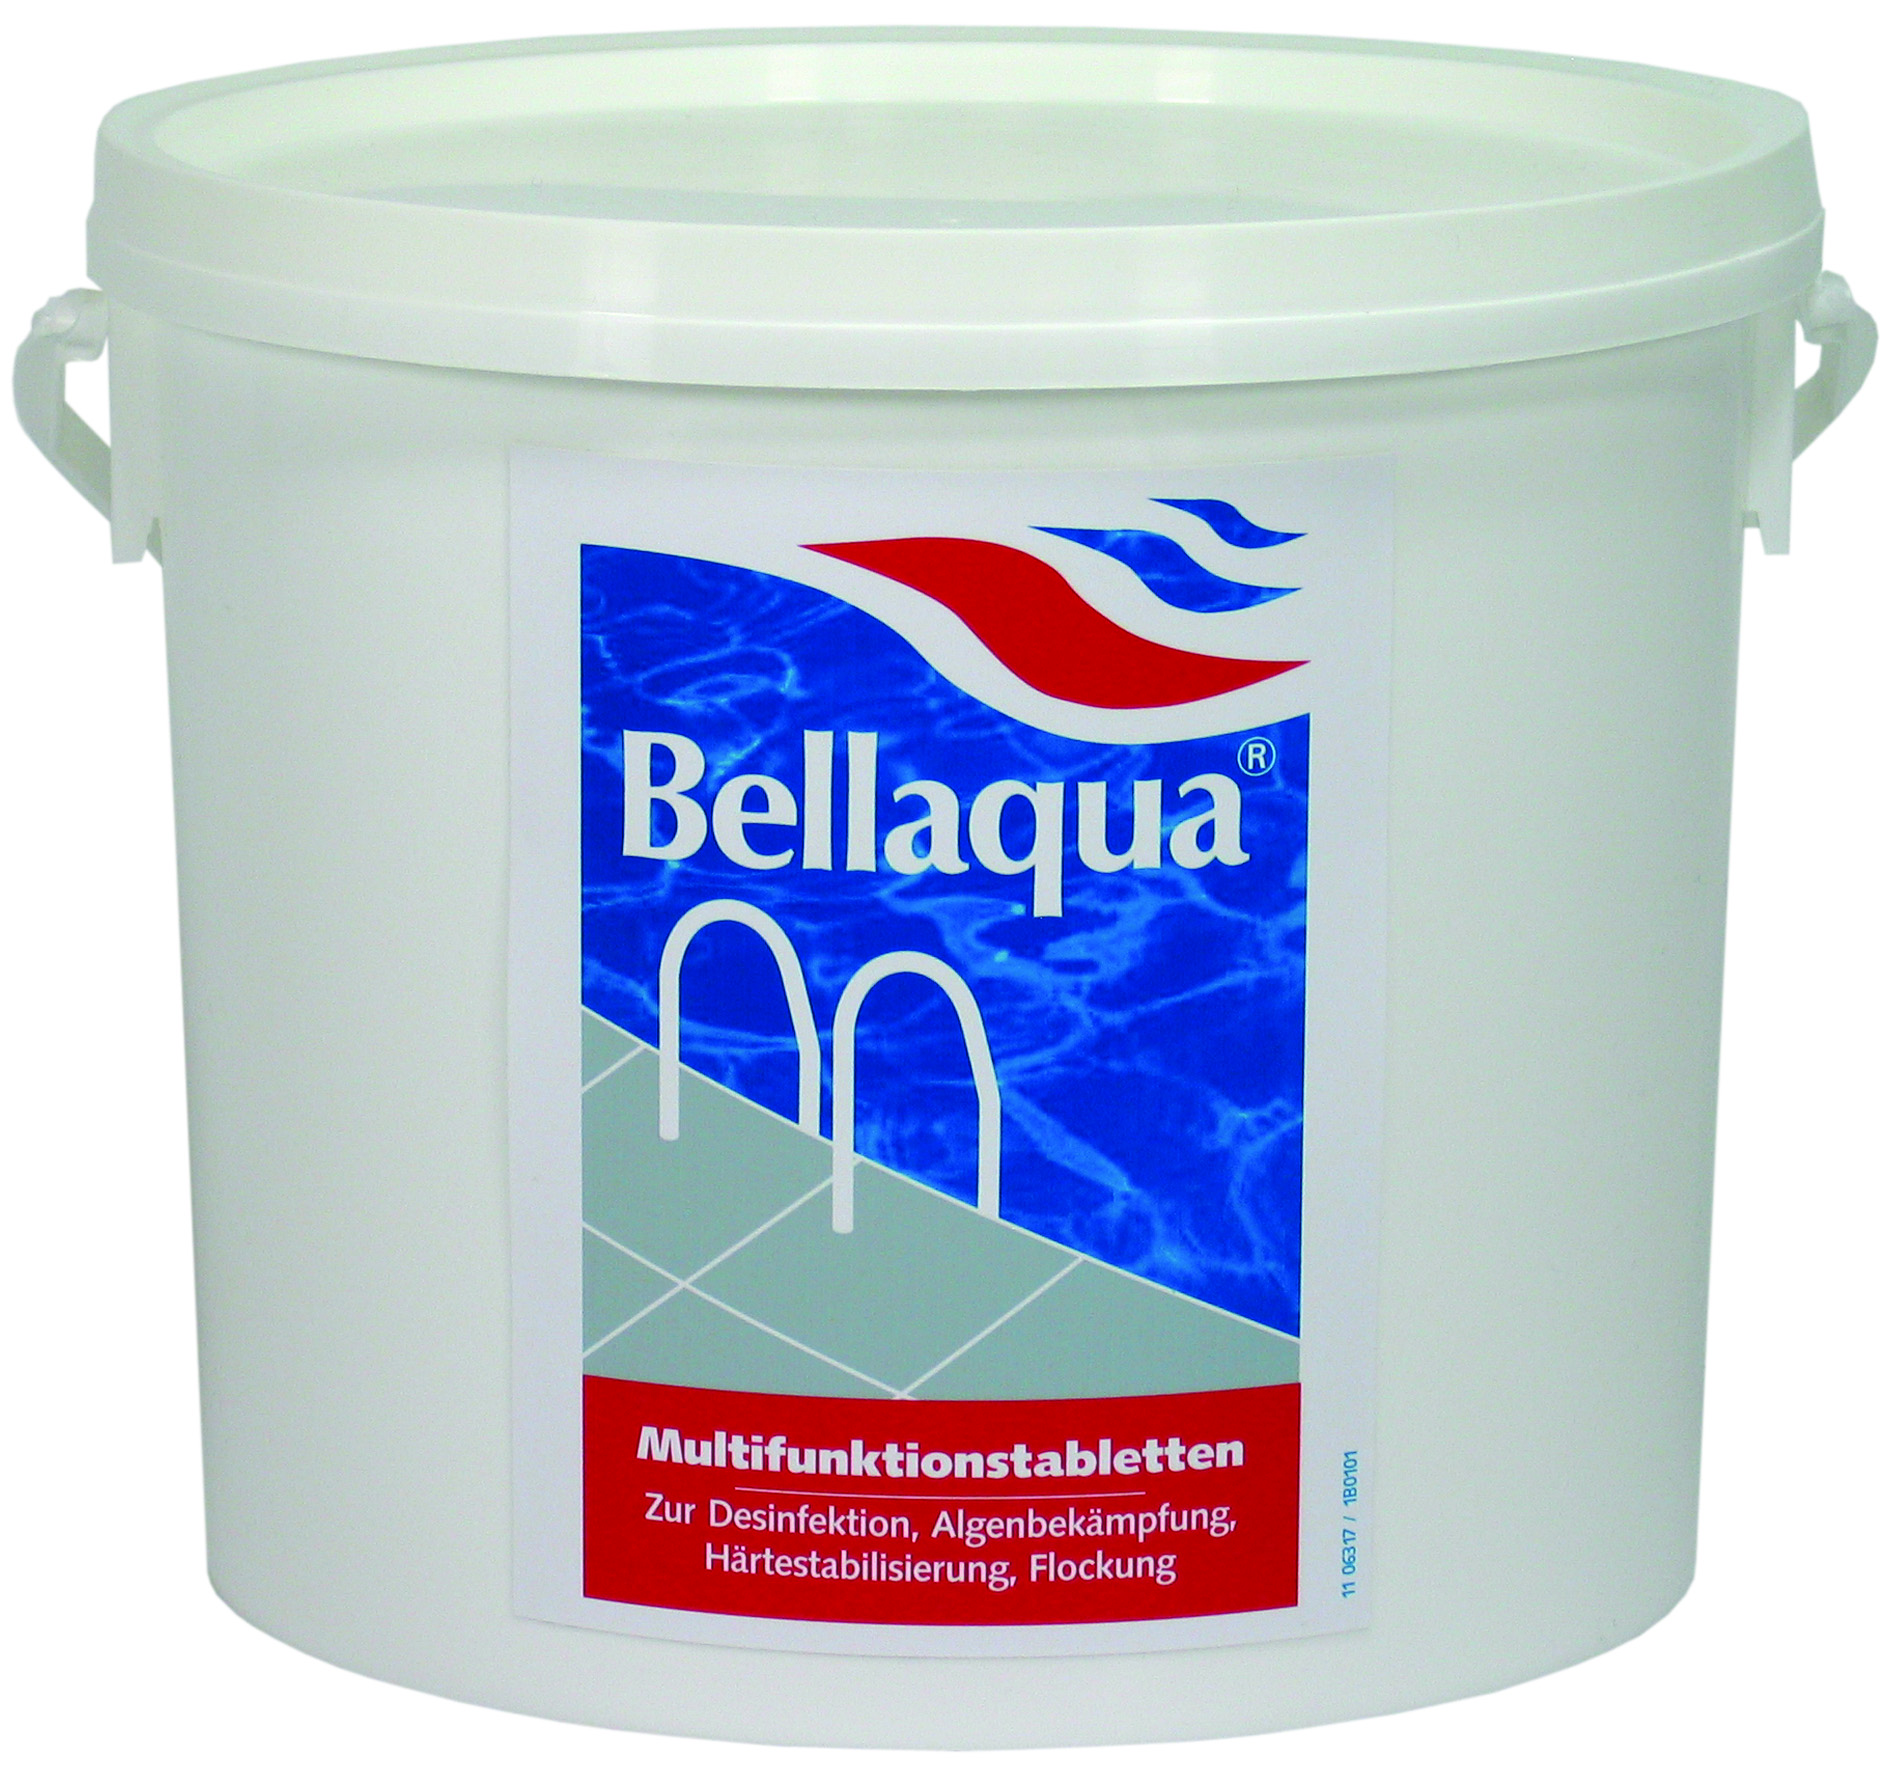 Bellaqua 4 in 1 Multifunktionstablette Chlor 200g Tabletten im 5kg Eimer Wasserpflege Poolpflege